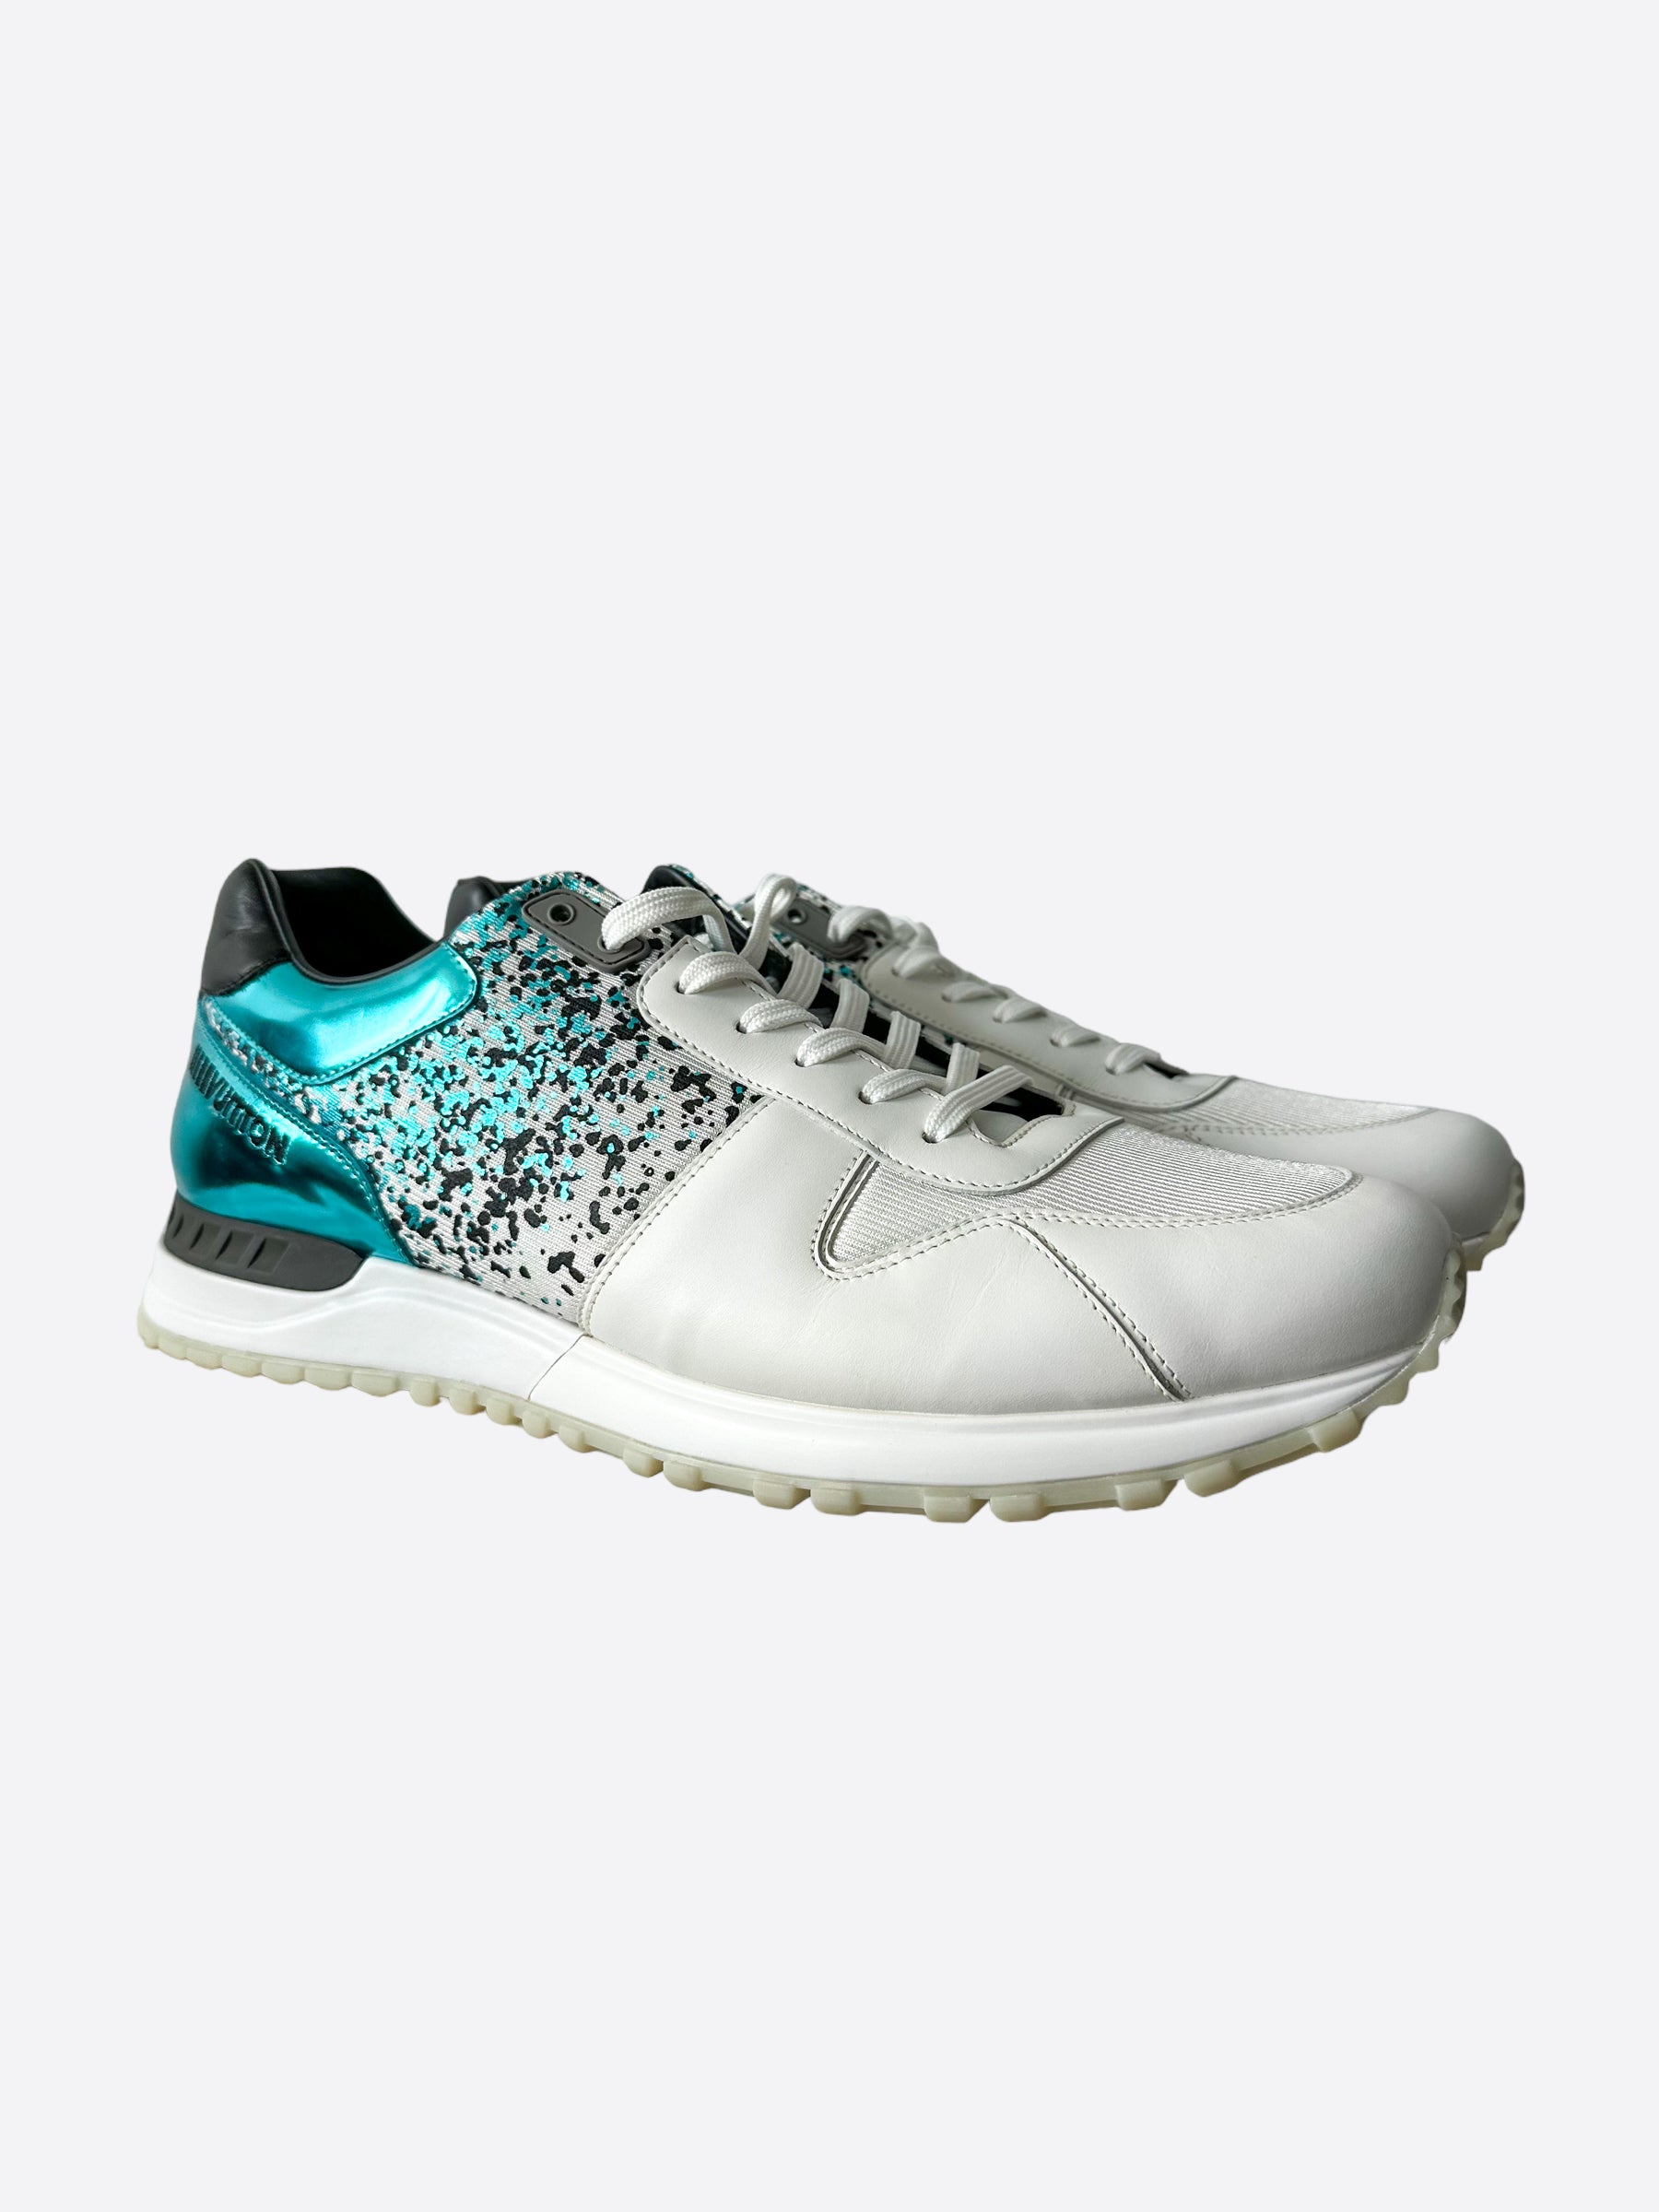 runaway sneakers white